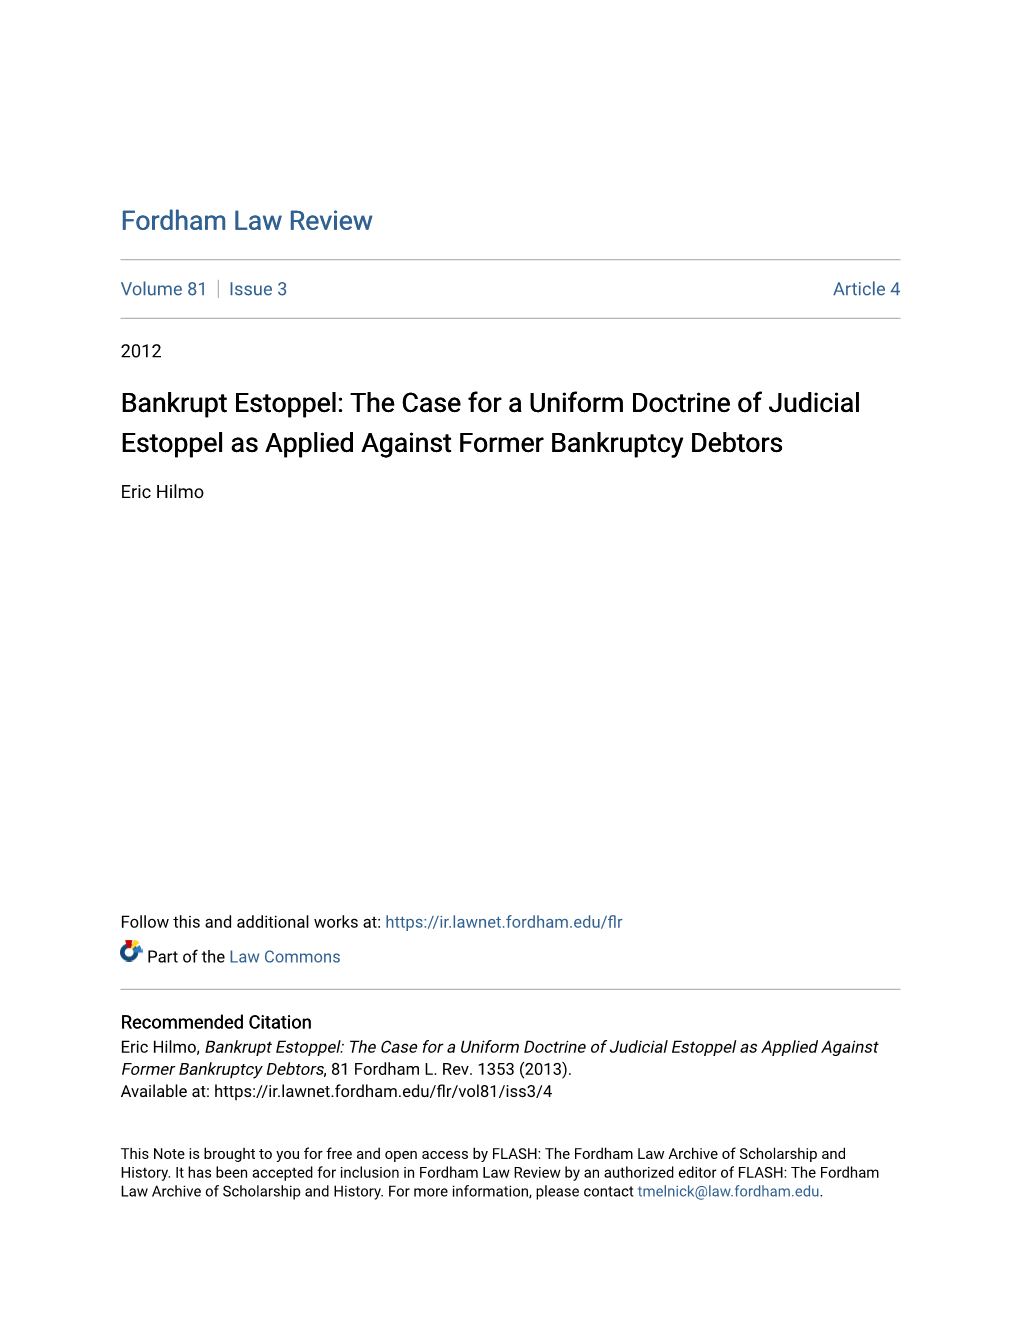 The Case for a Uniform Doctrine of Judicial Estoppel As Applied Against Former Bankruptcy Debtors